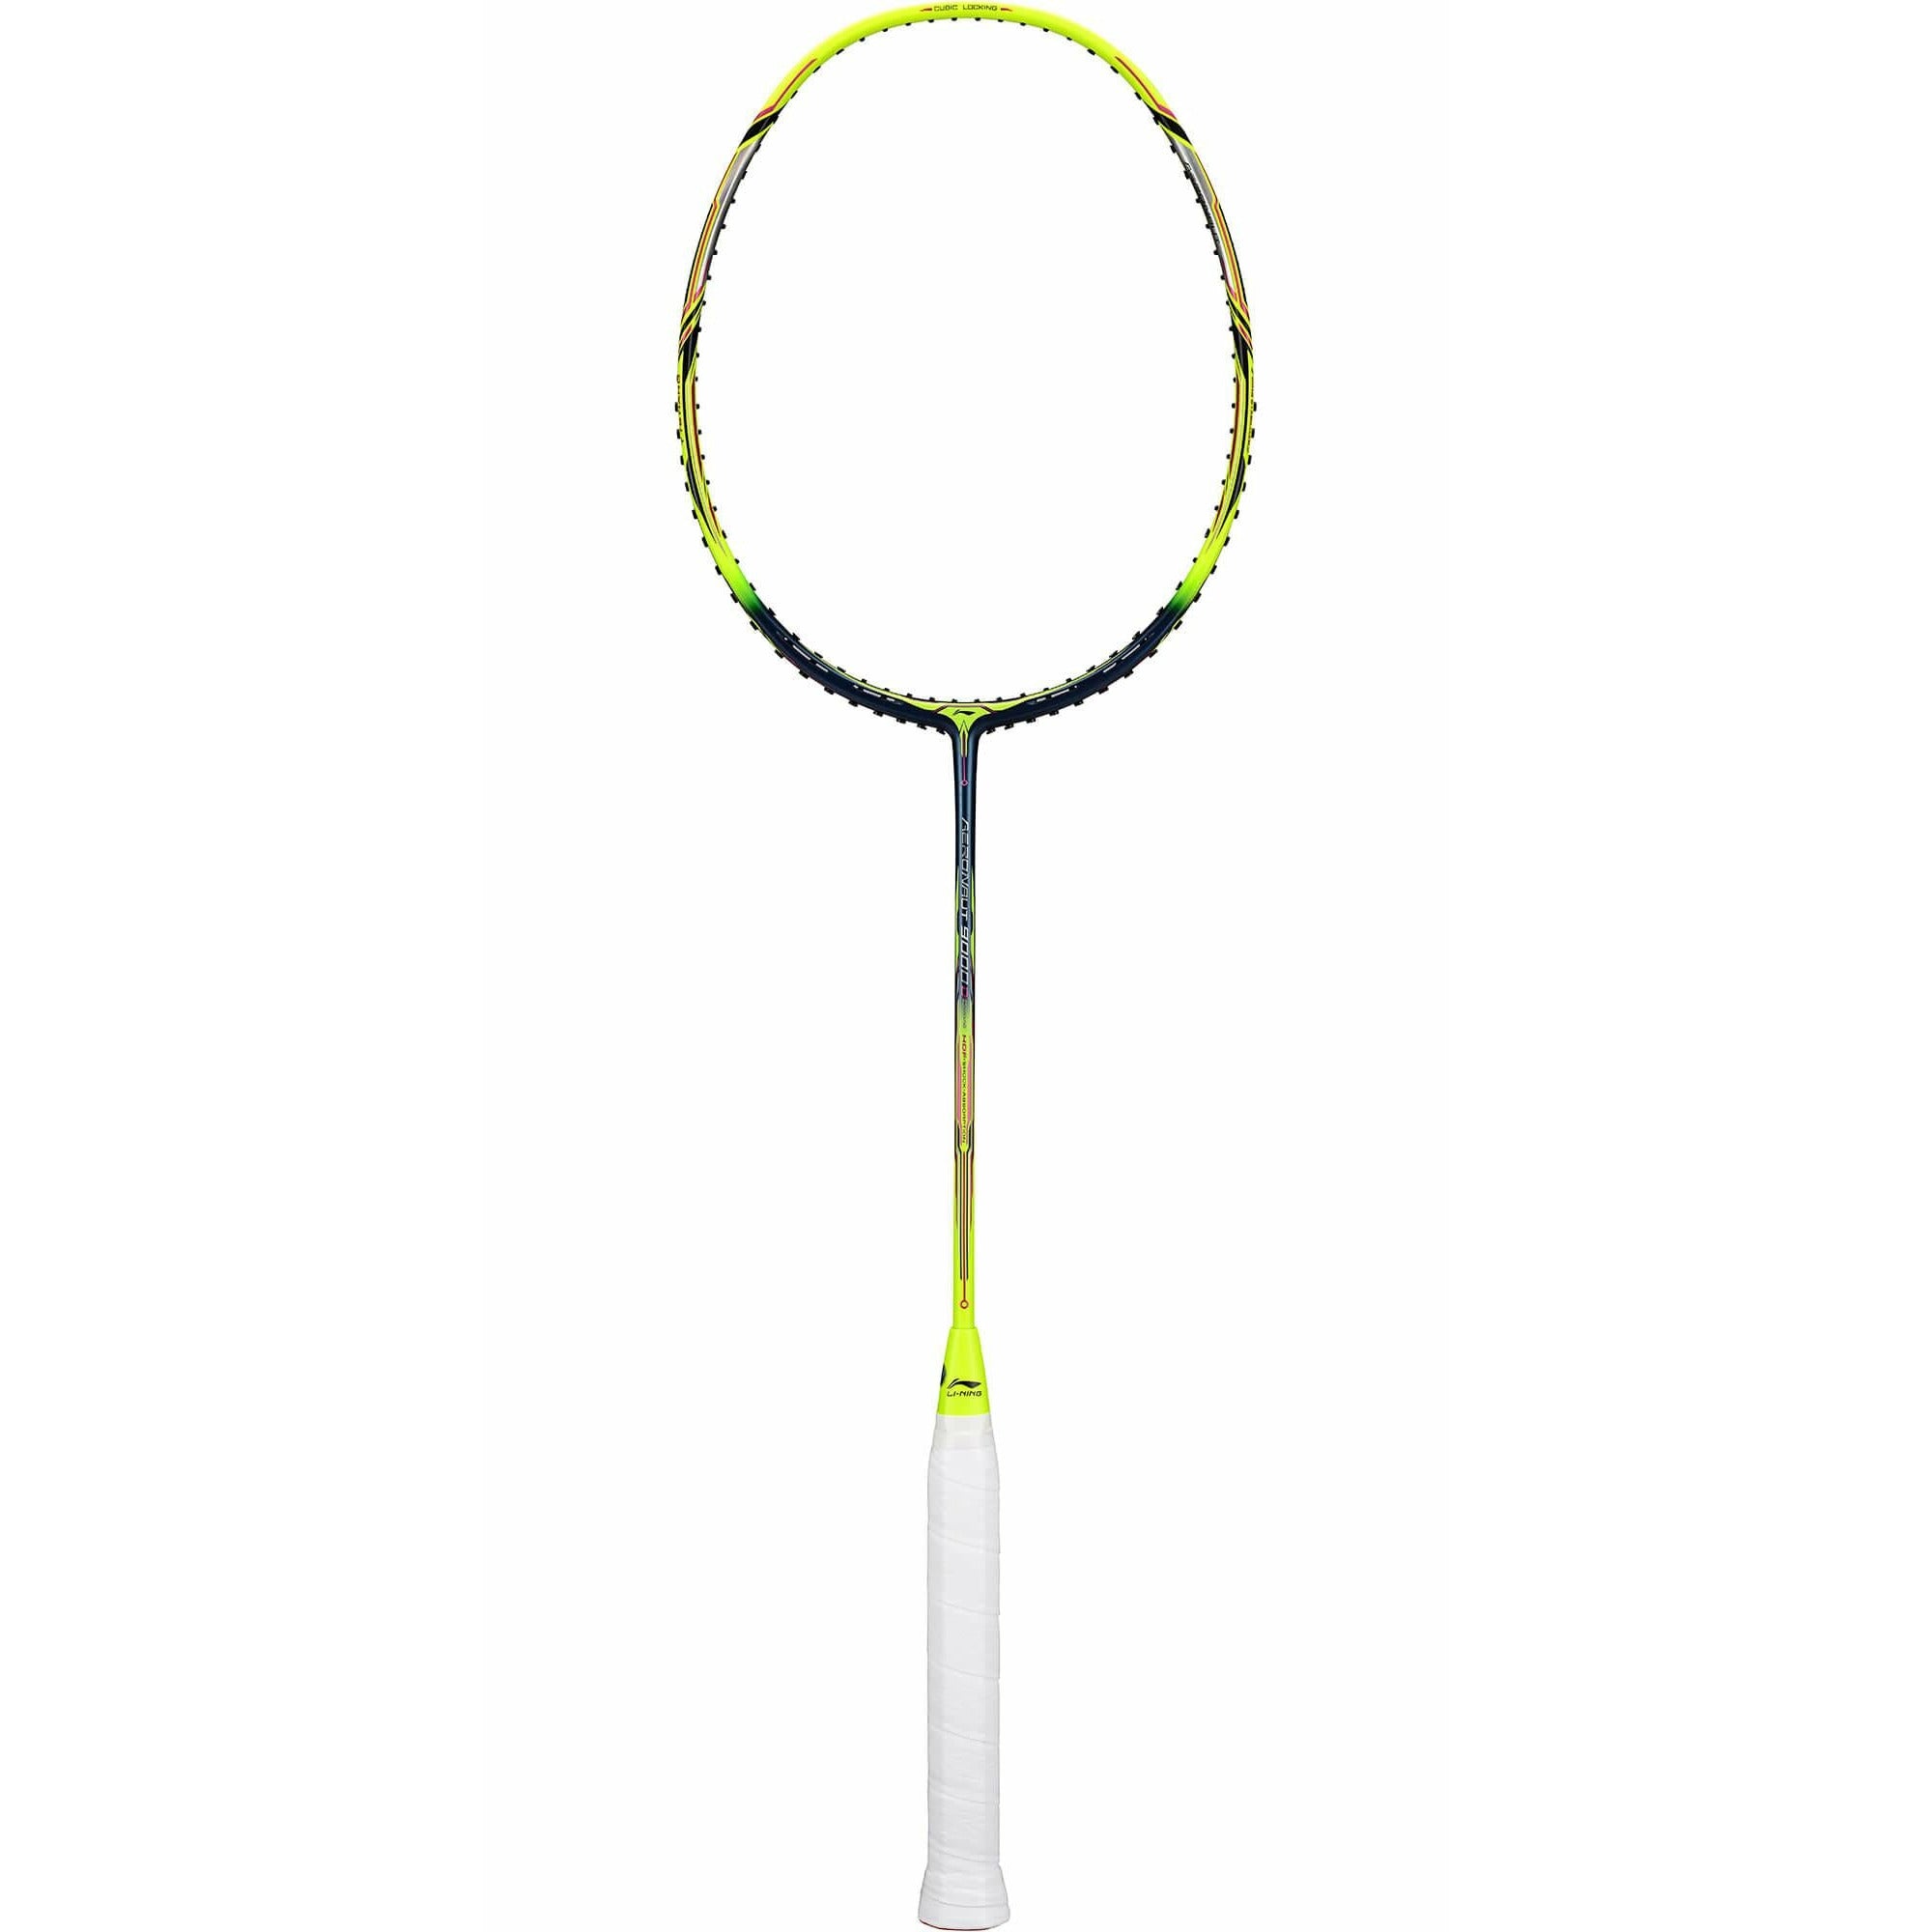 li-ning aeronaut 9000 drive badminton racket